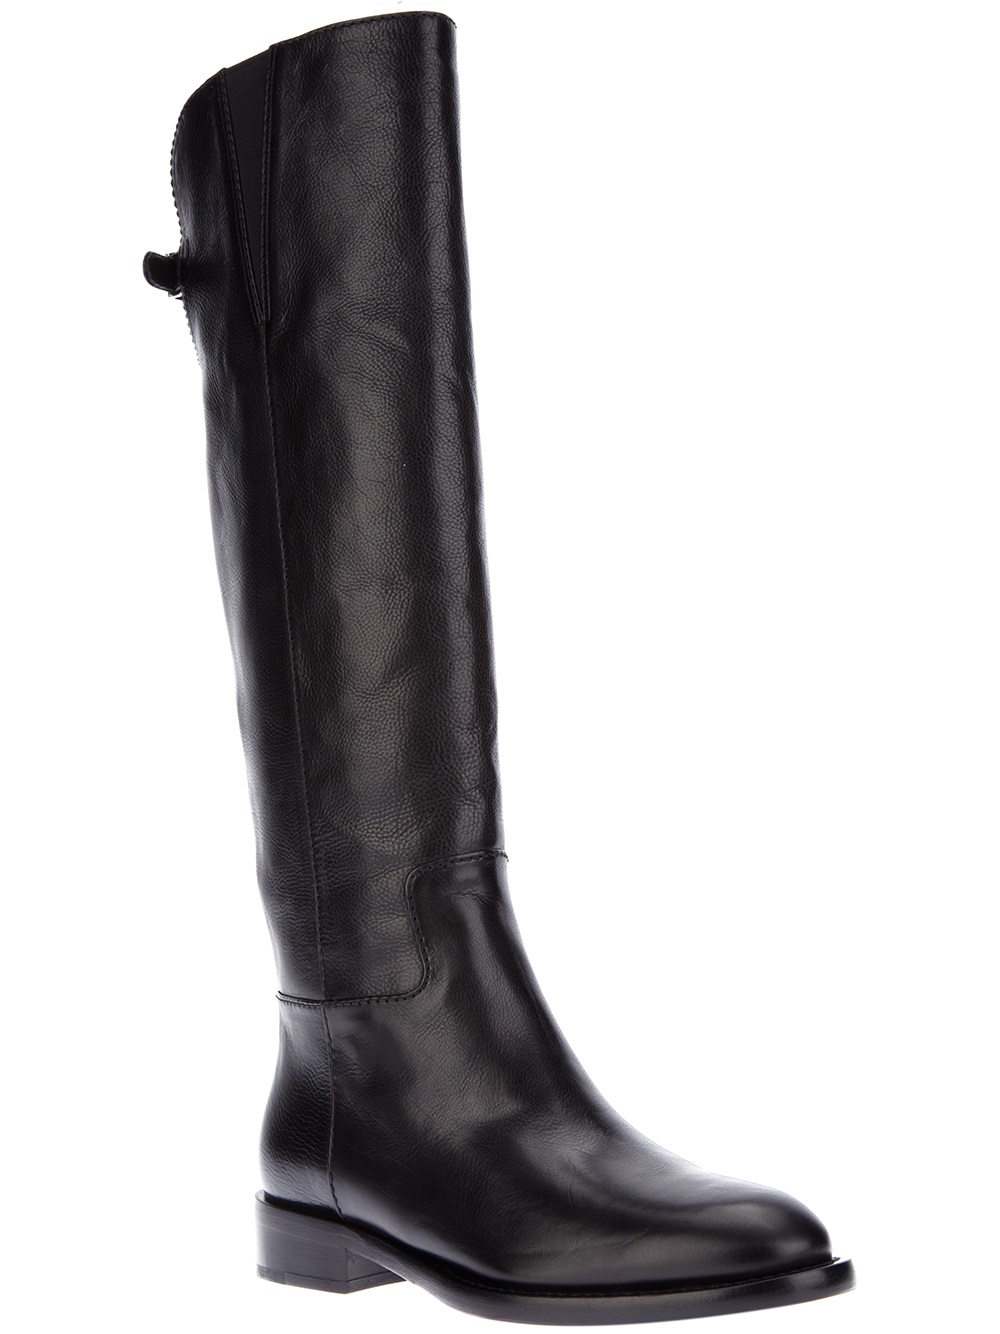 Dolce & Gabbana Knee High Boot in Black | Lyst